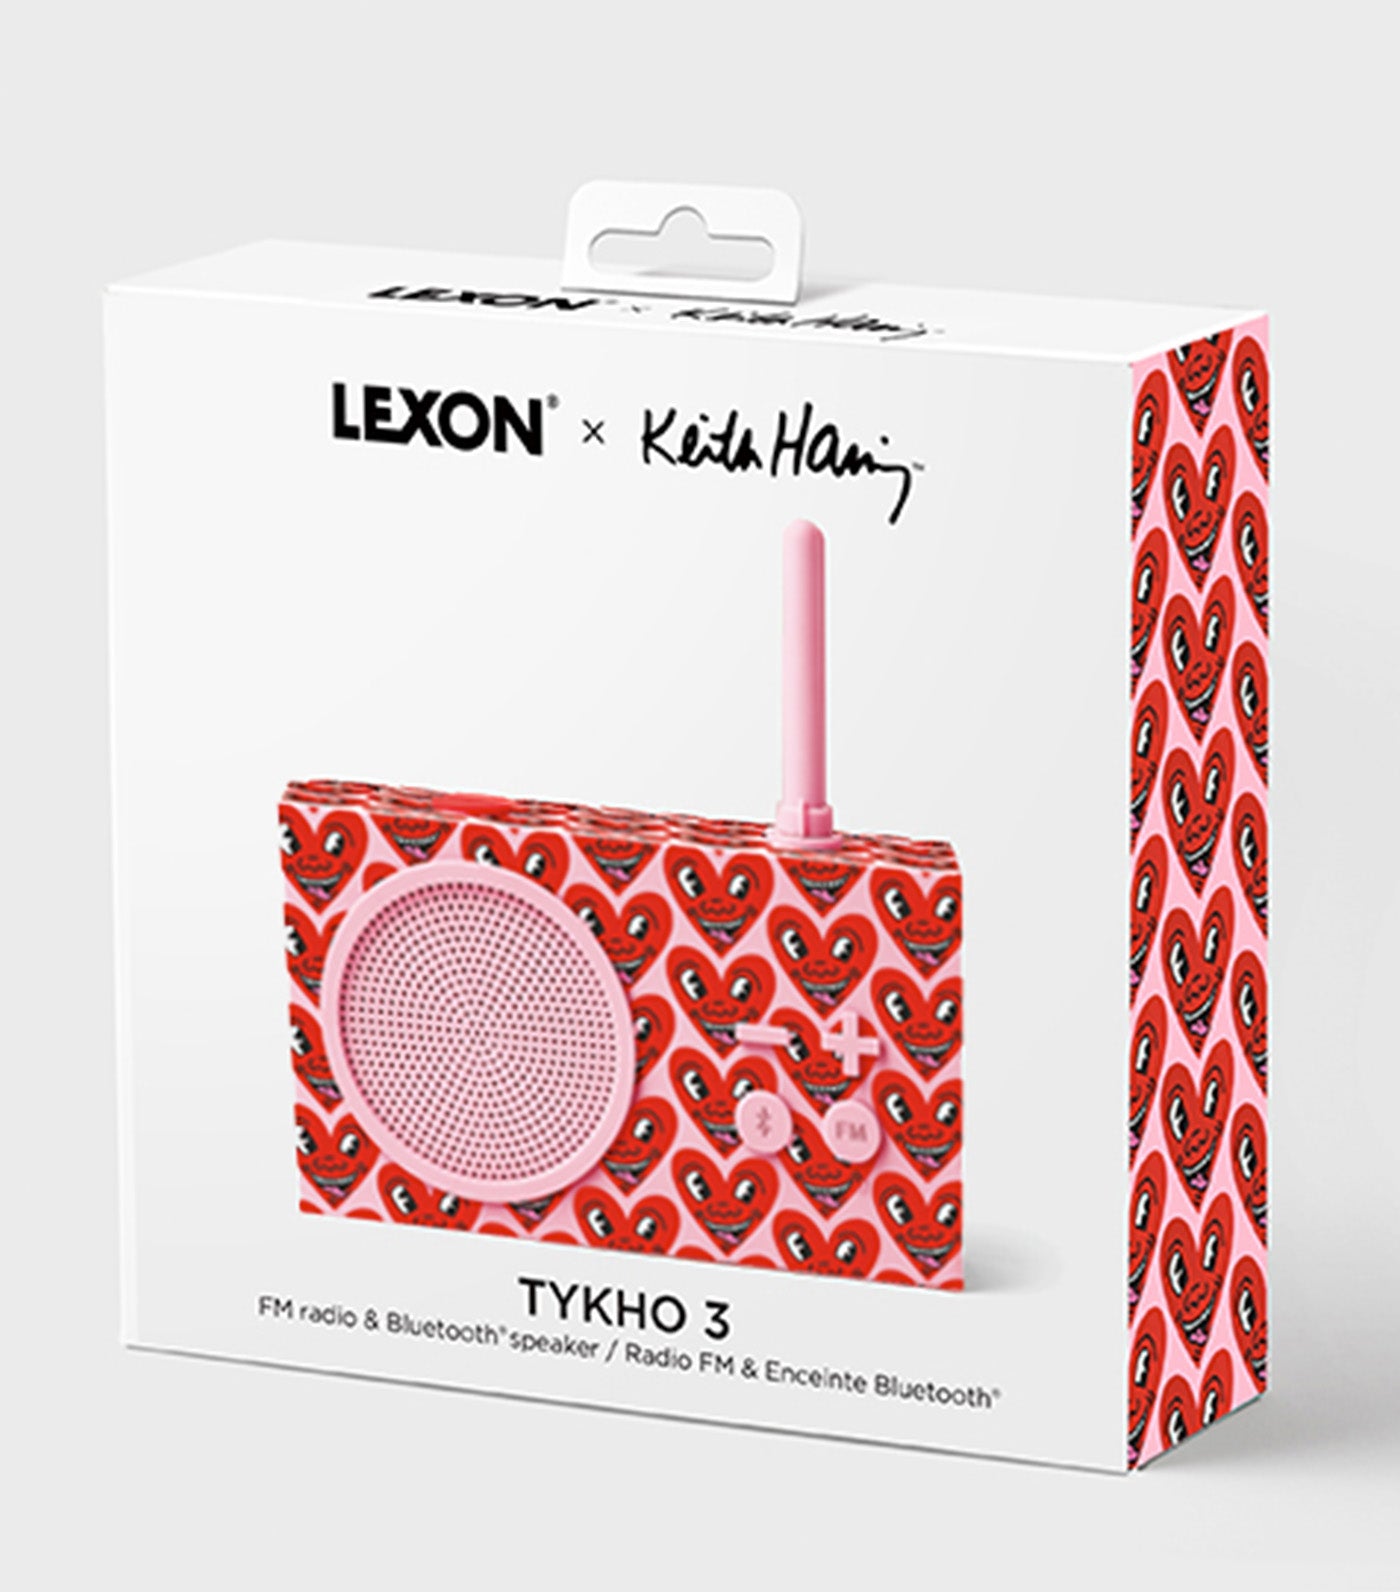 Lexon x Keith Haring Gift Set Heart